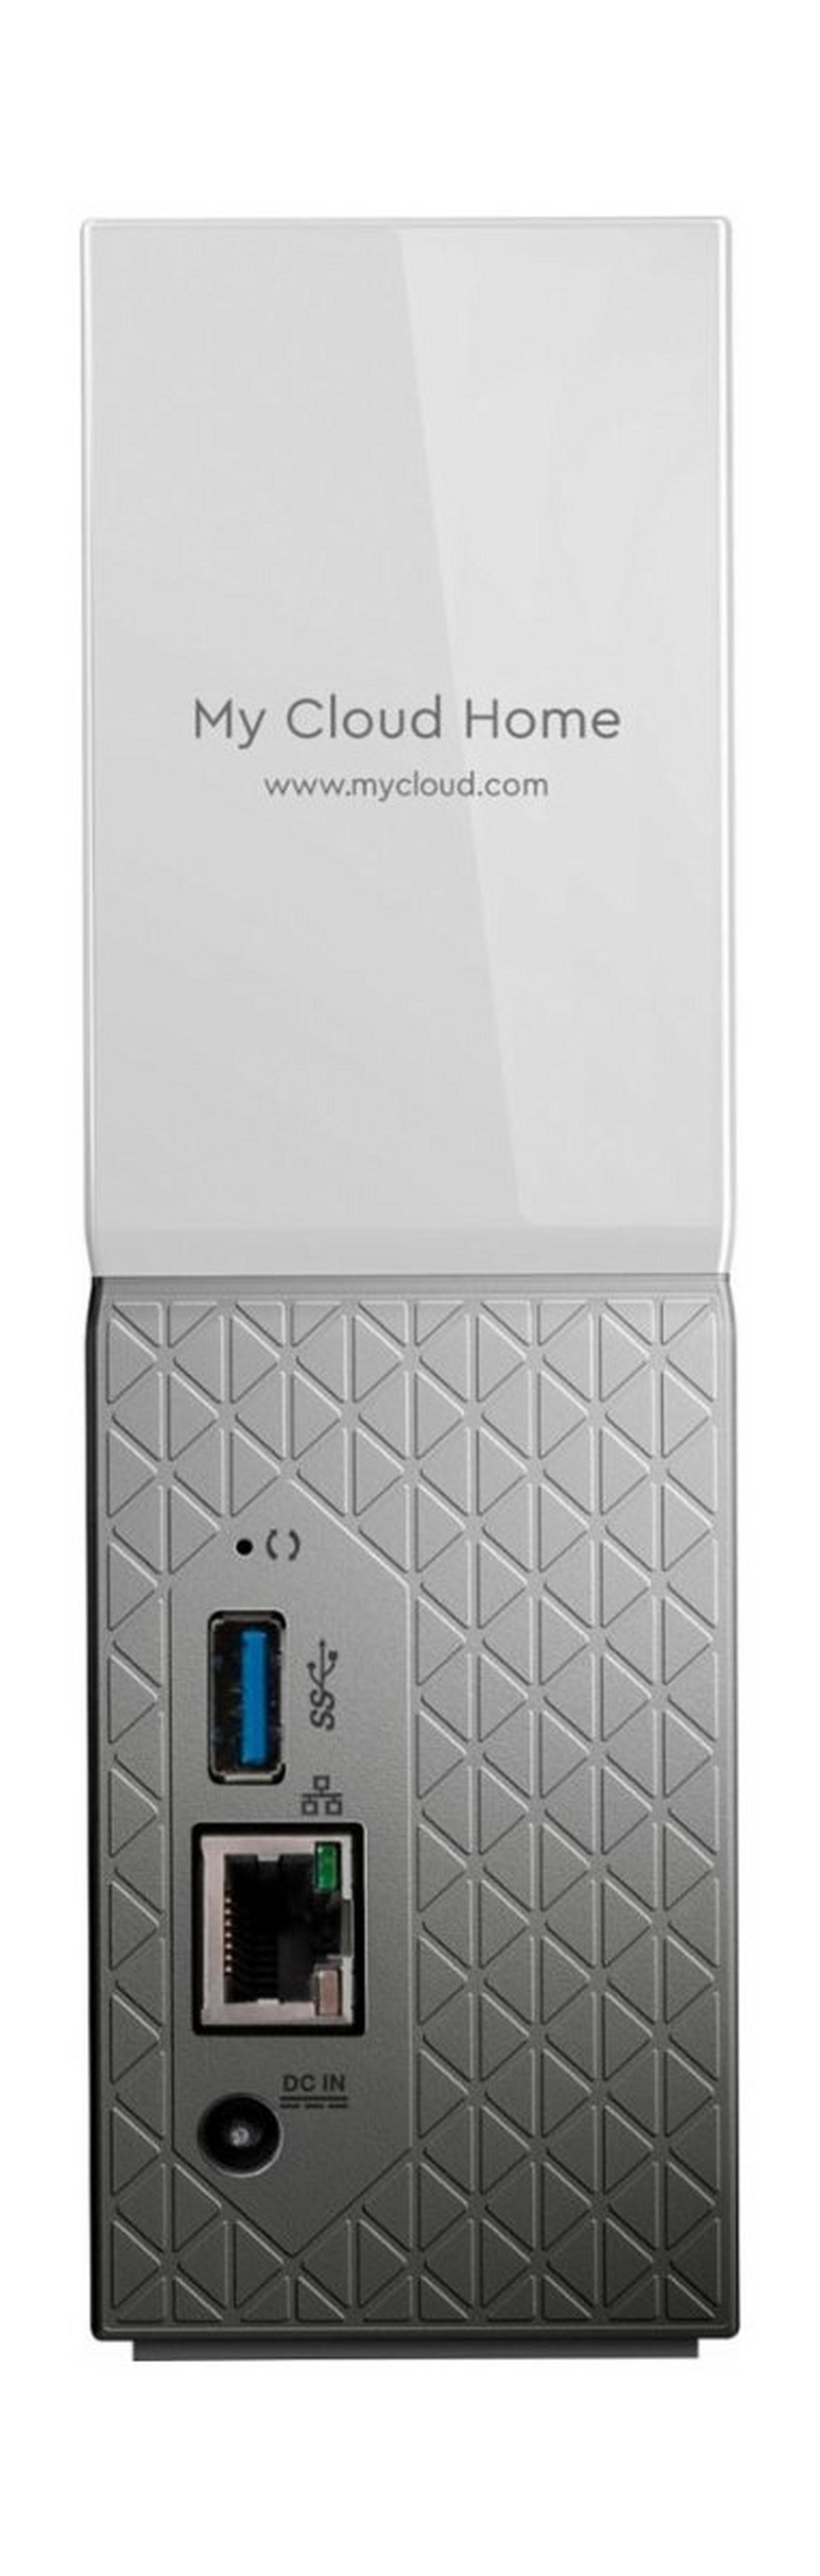 Western Digital 4TB MyCloud Home Hard Drive (WDBVXC0040HWT) - White